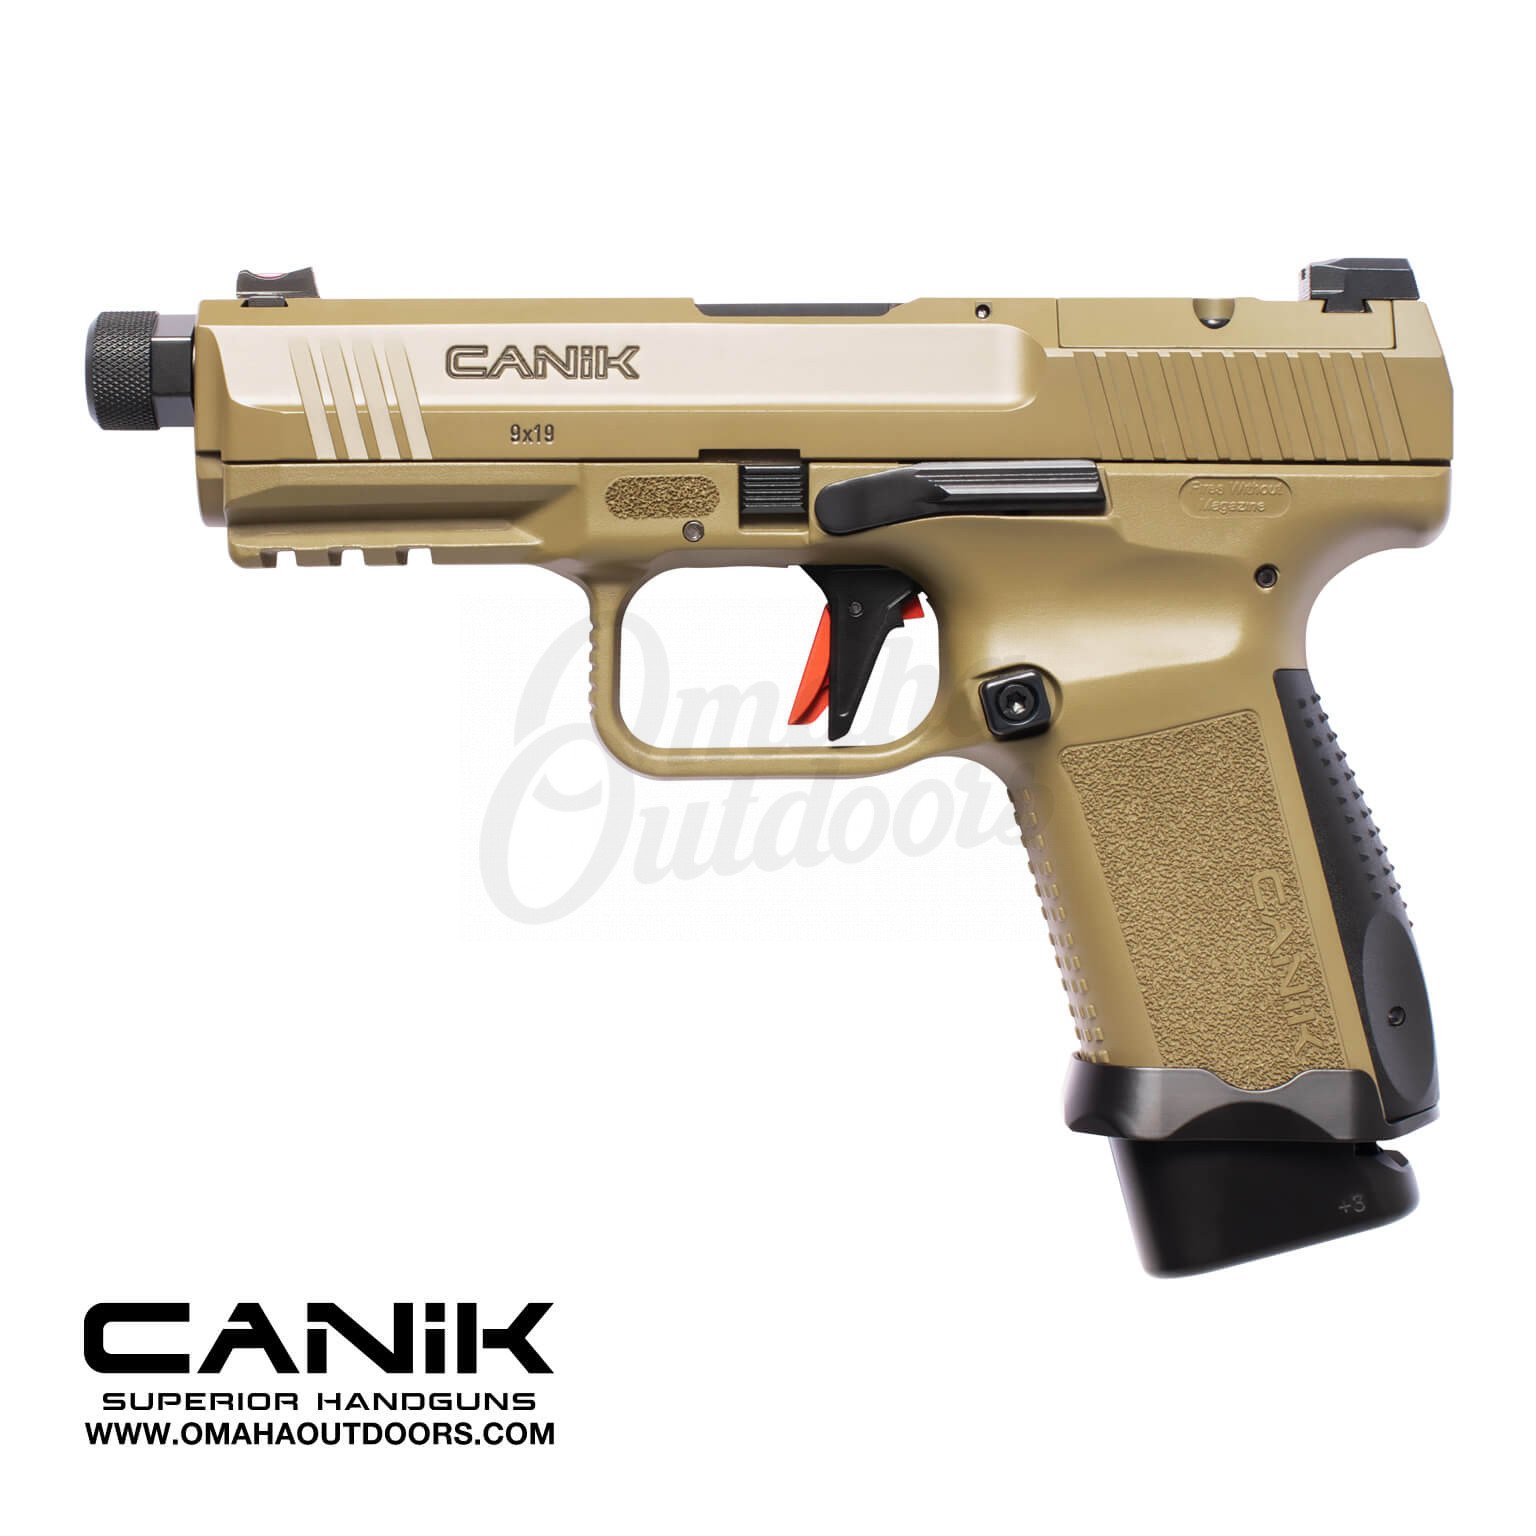 Canik tp9 sc mag sleeve : r/canik